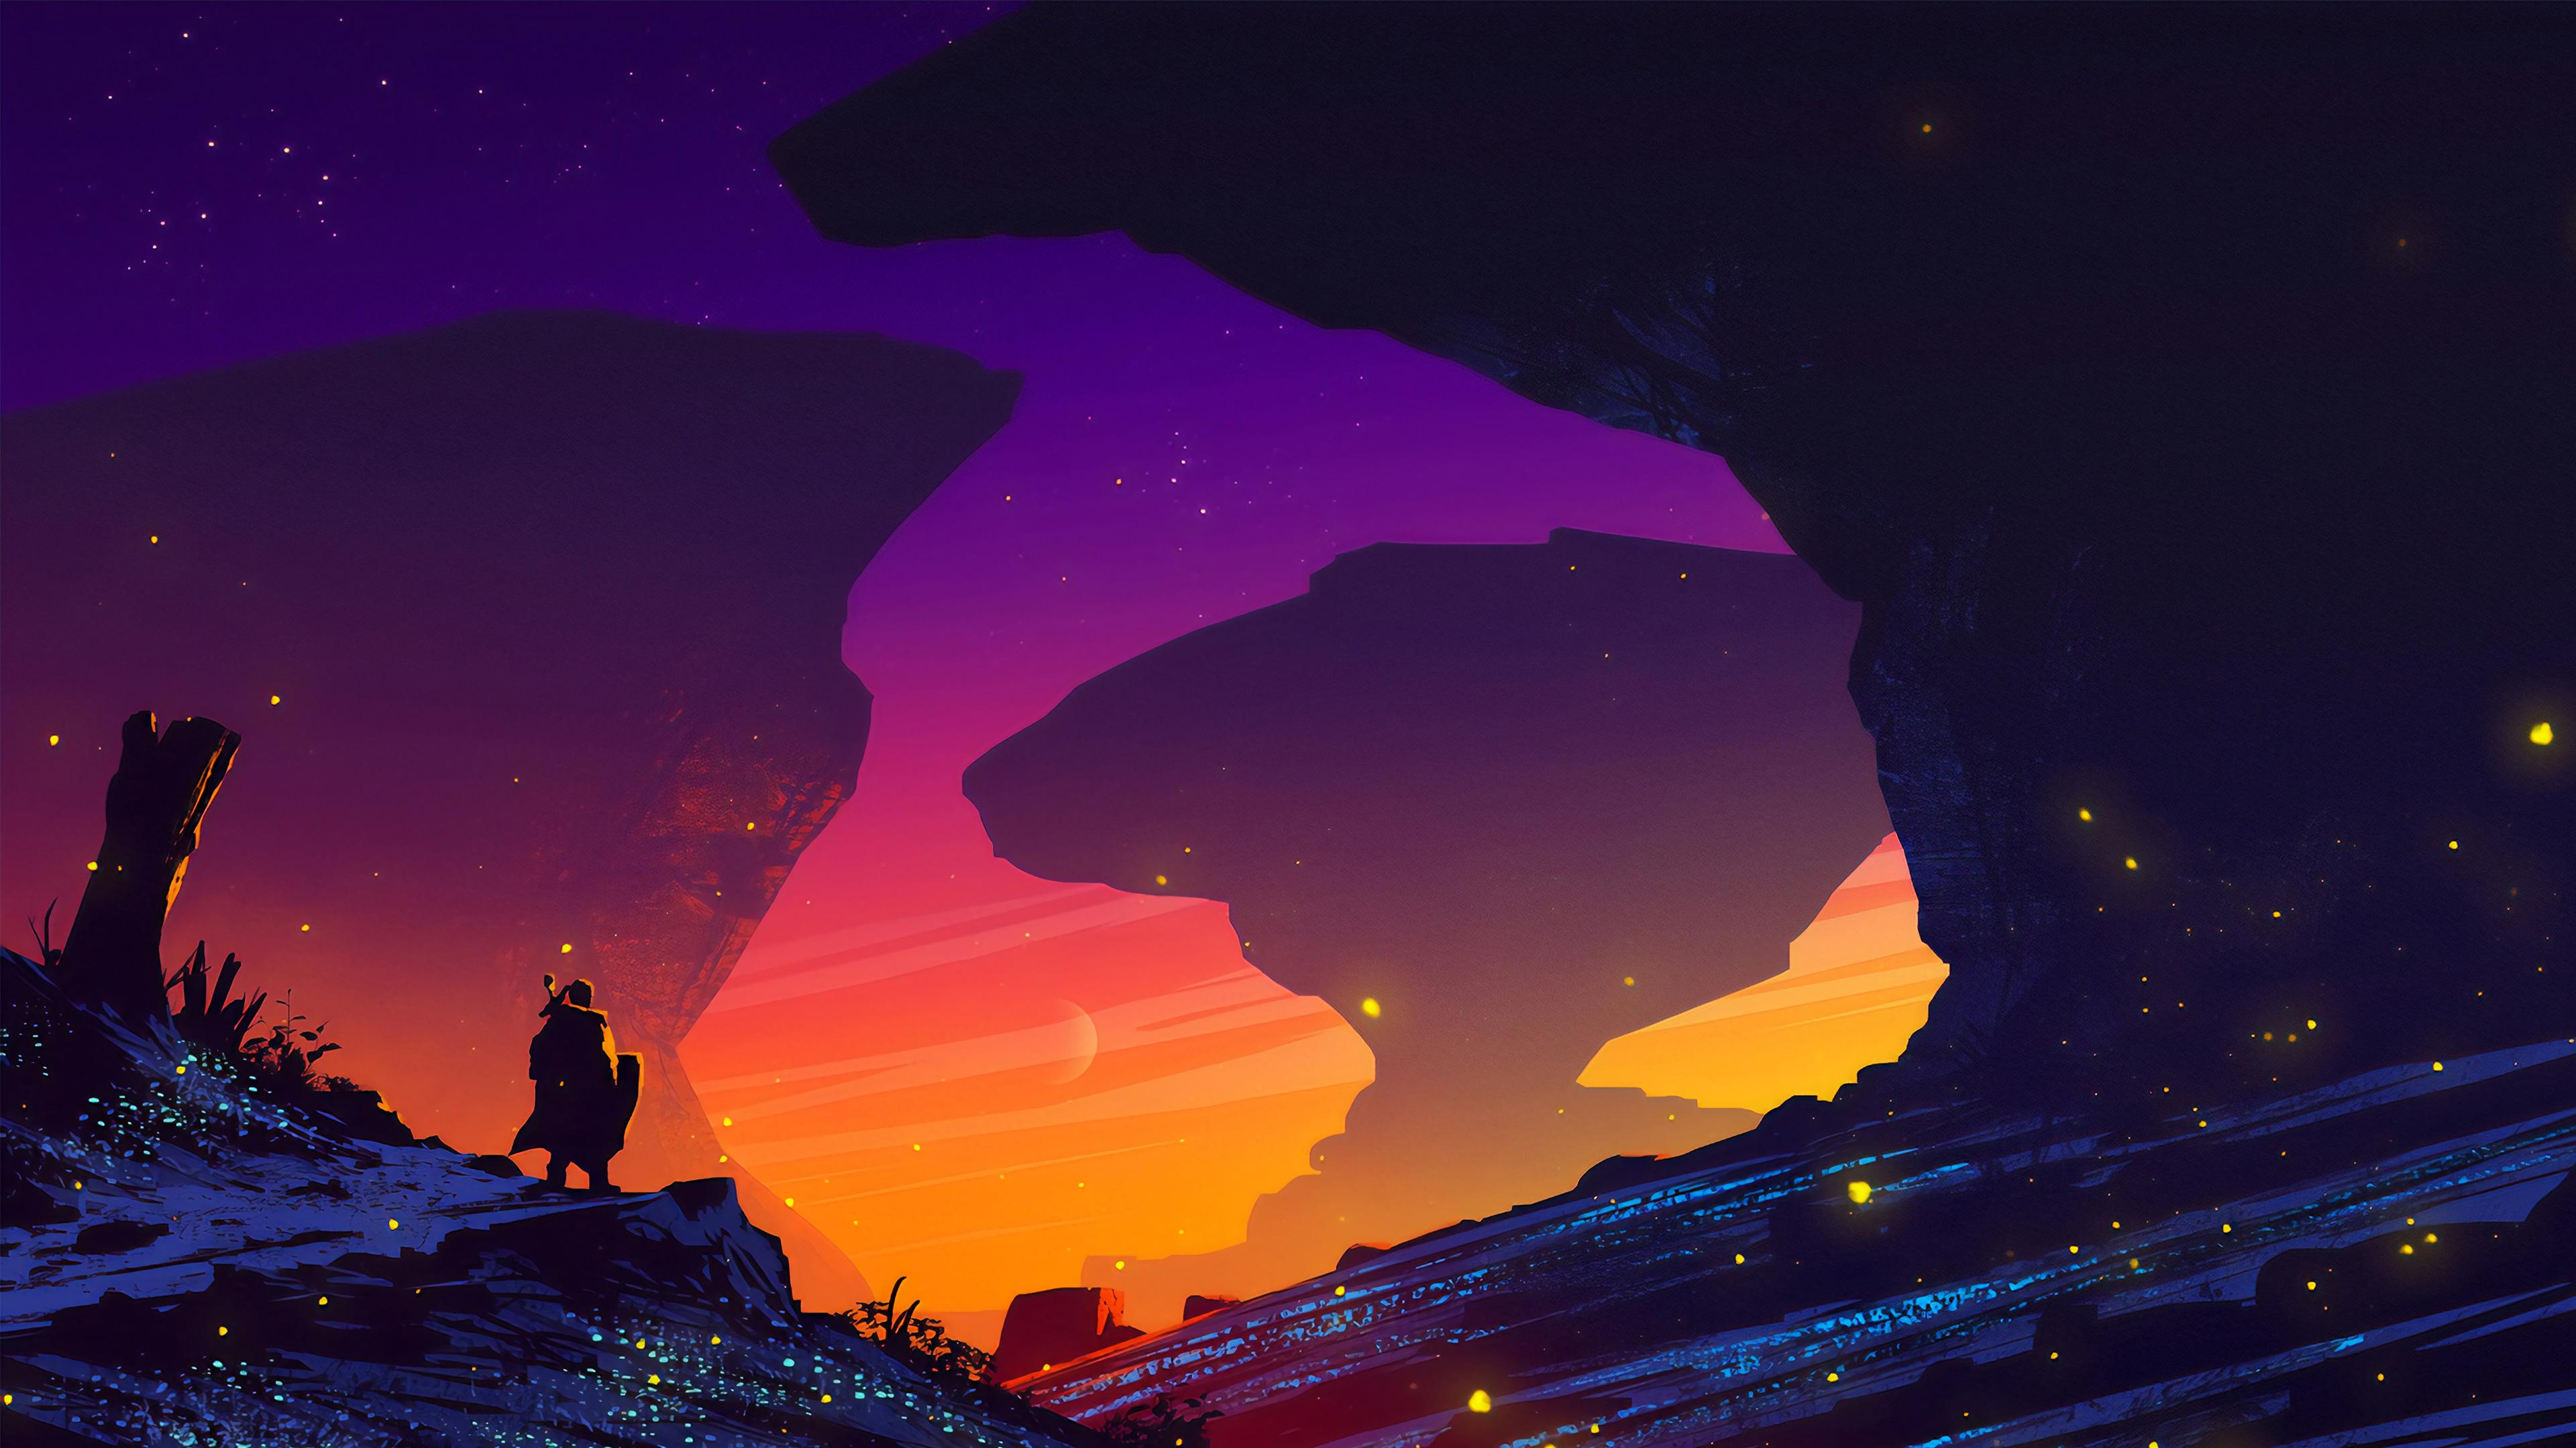 Digital Art Night Scenery Fantasy Landscape 4k Wallpaper